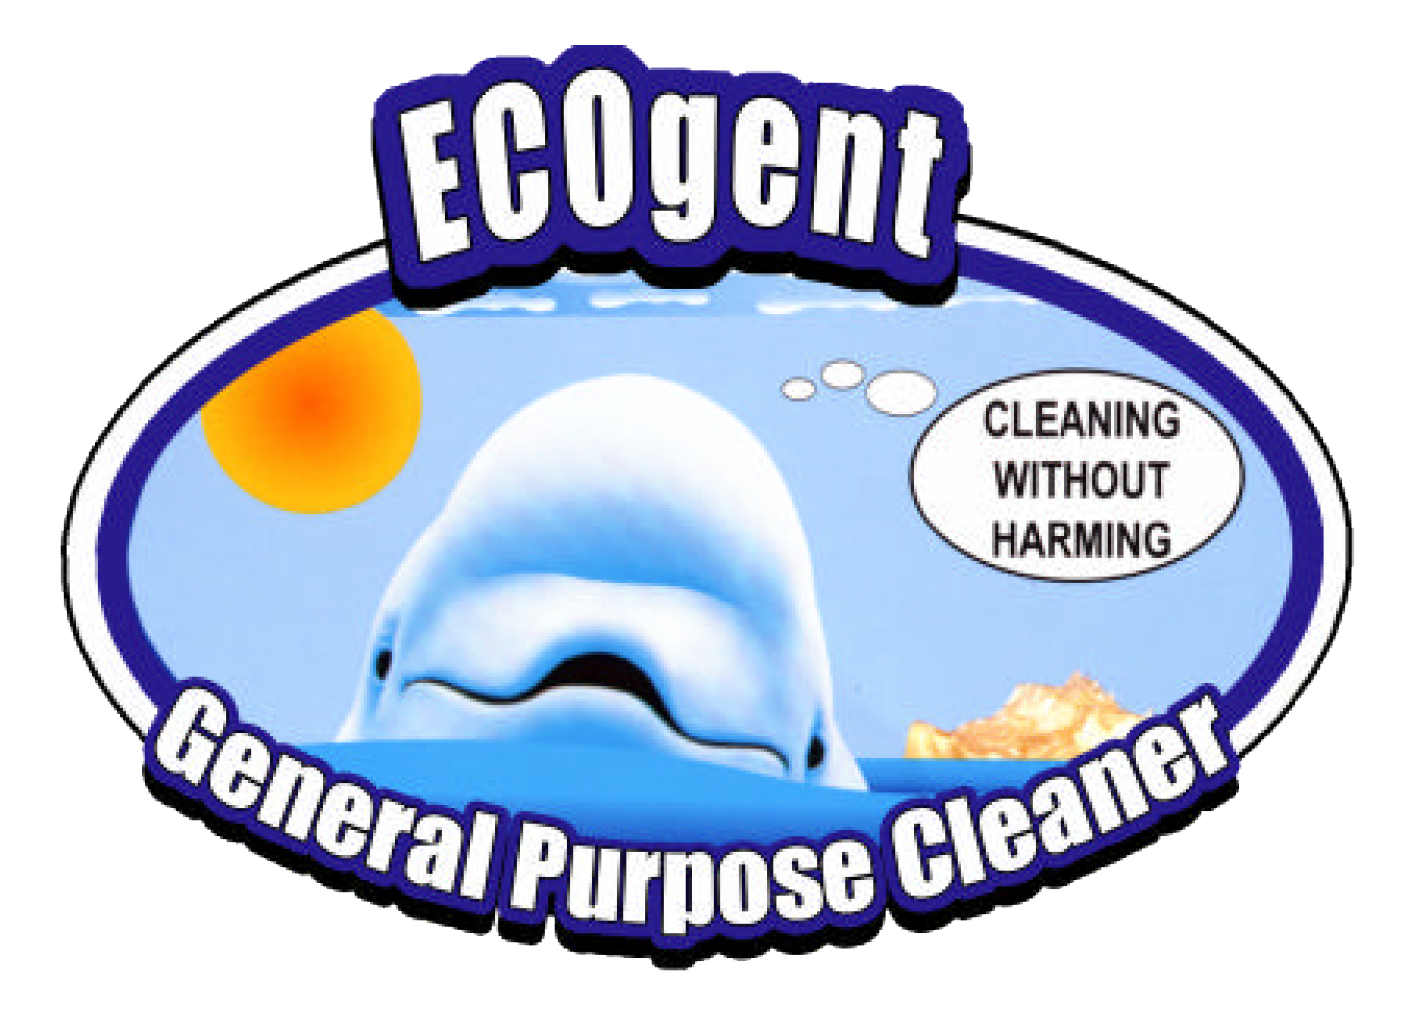 ECOGENT general purpose cleaner